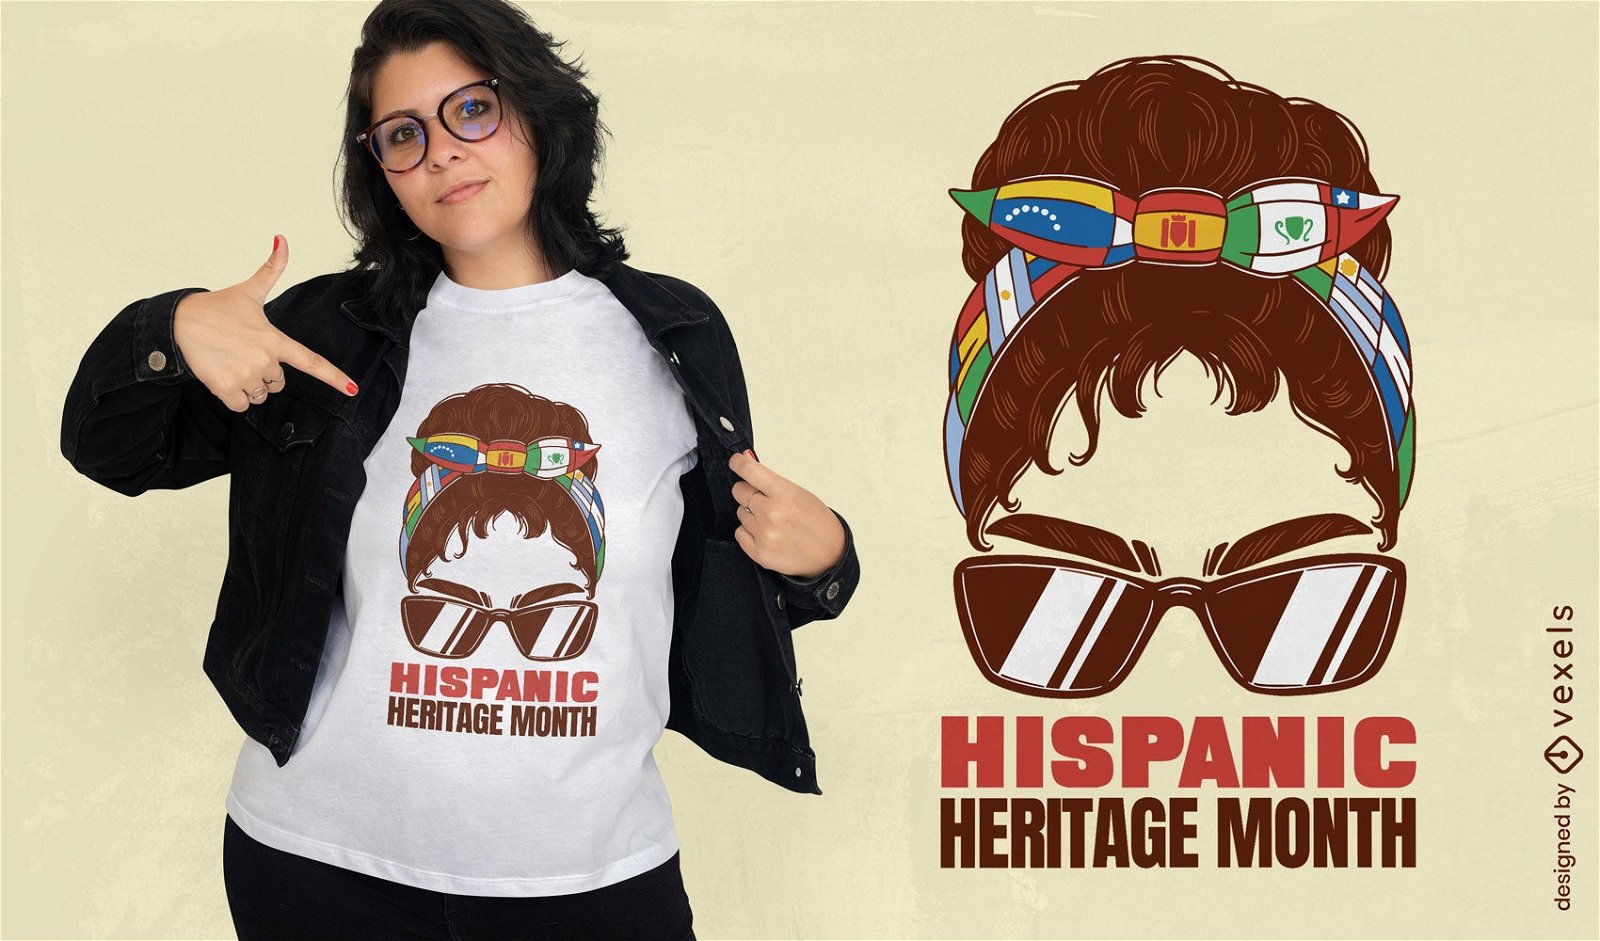 Hispanic heritage month t-shirt design